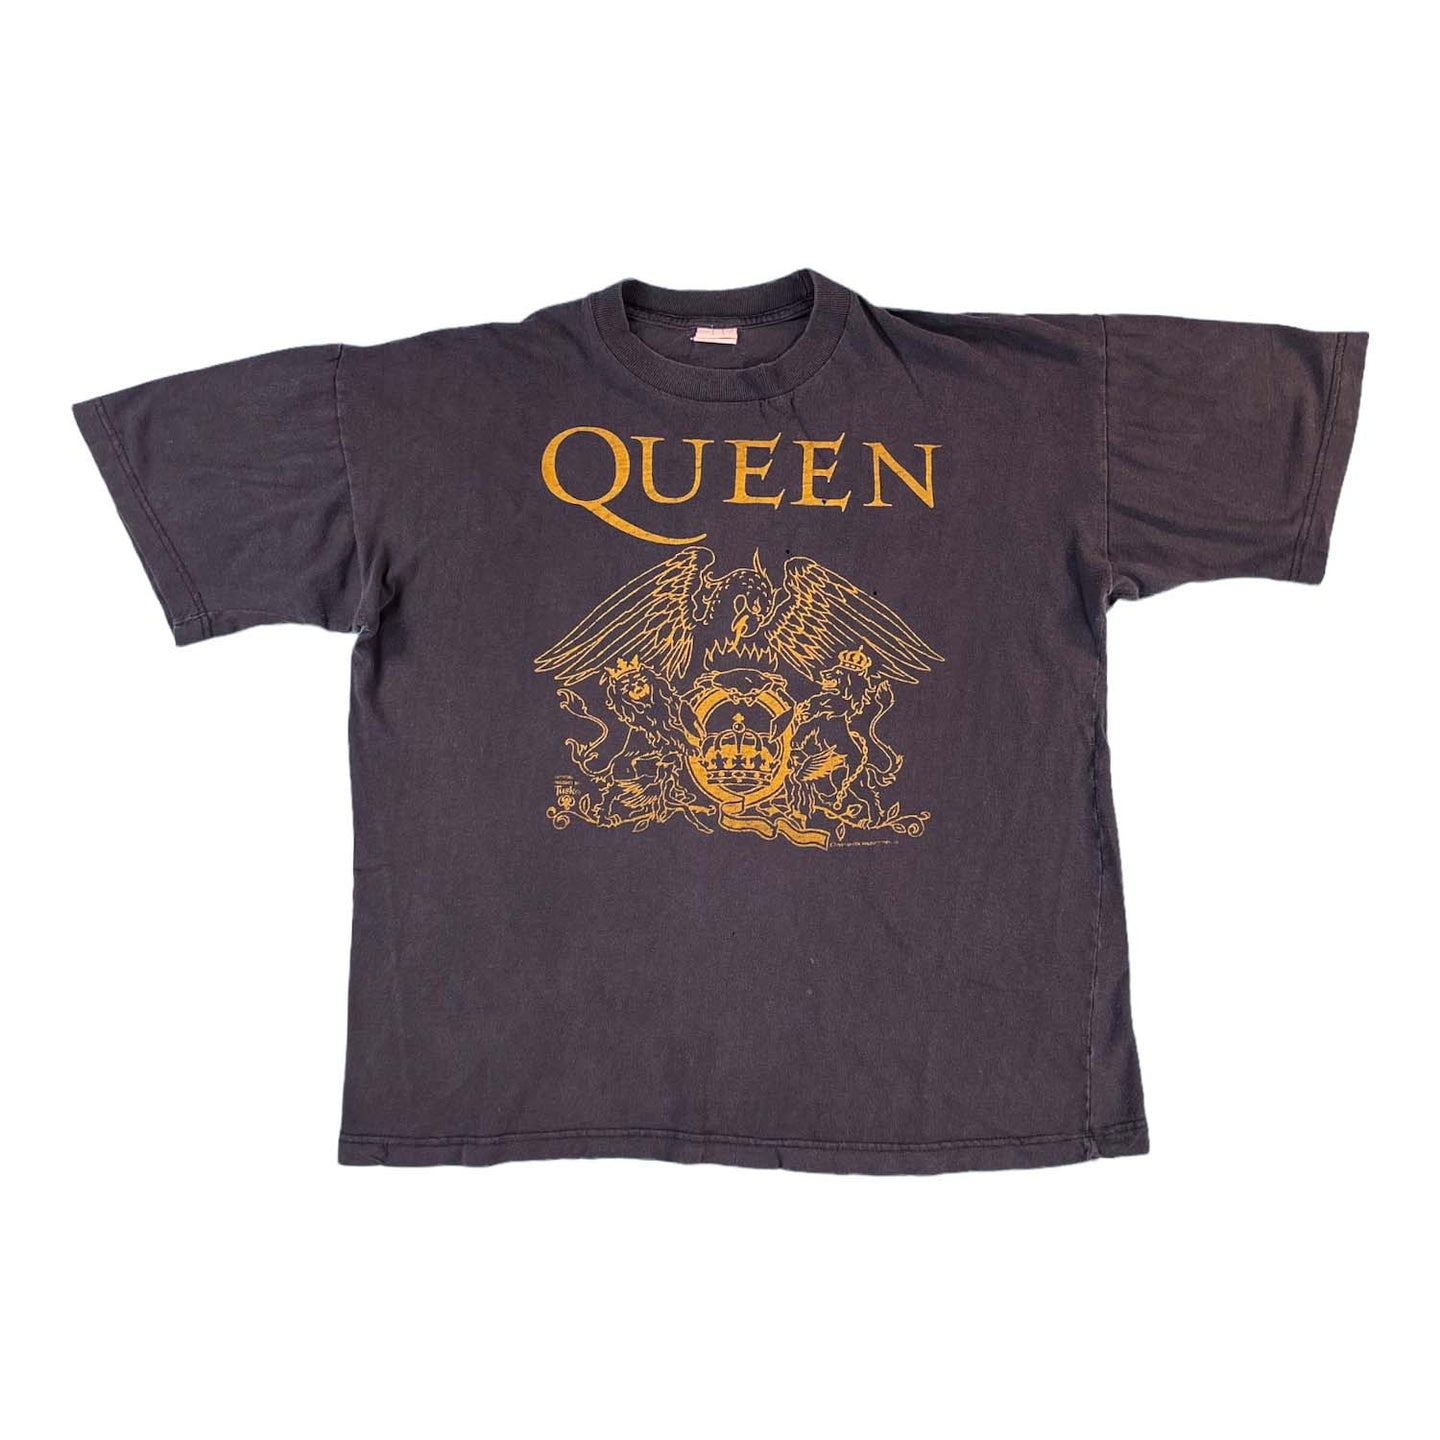 1997 Queen band tee M